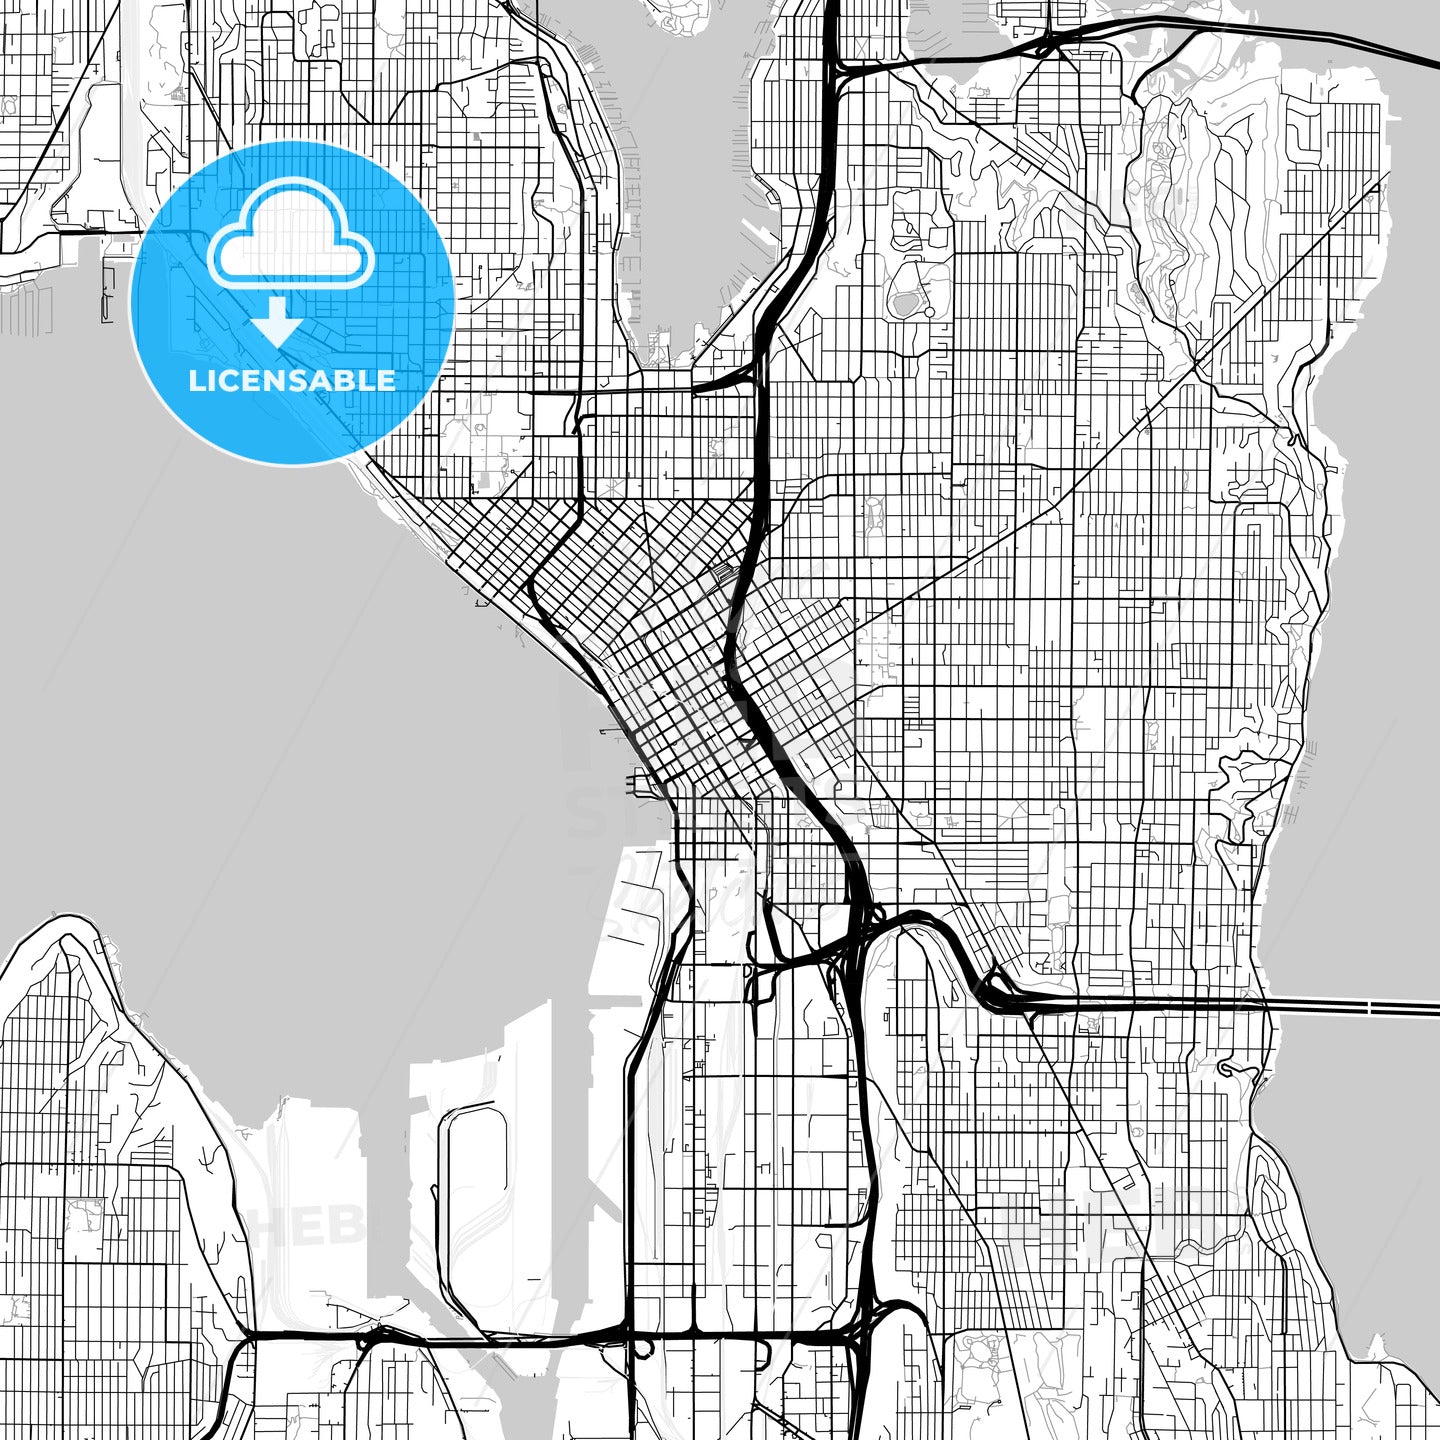 Map of Seattle, Washington